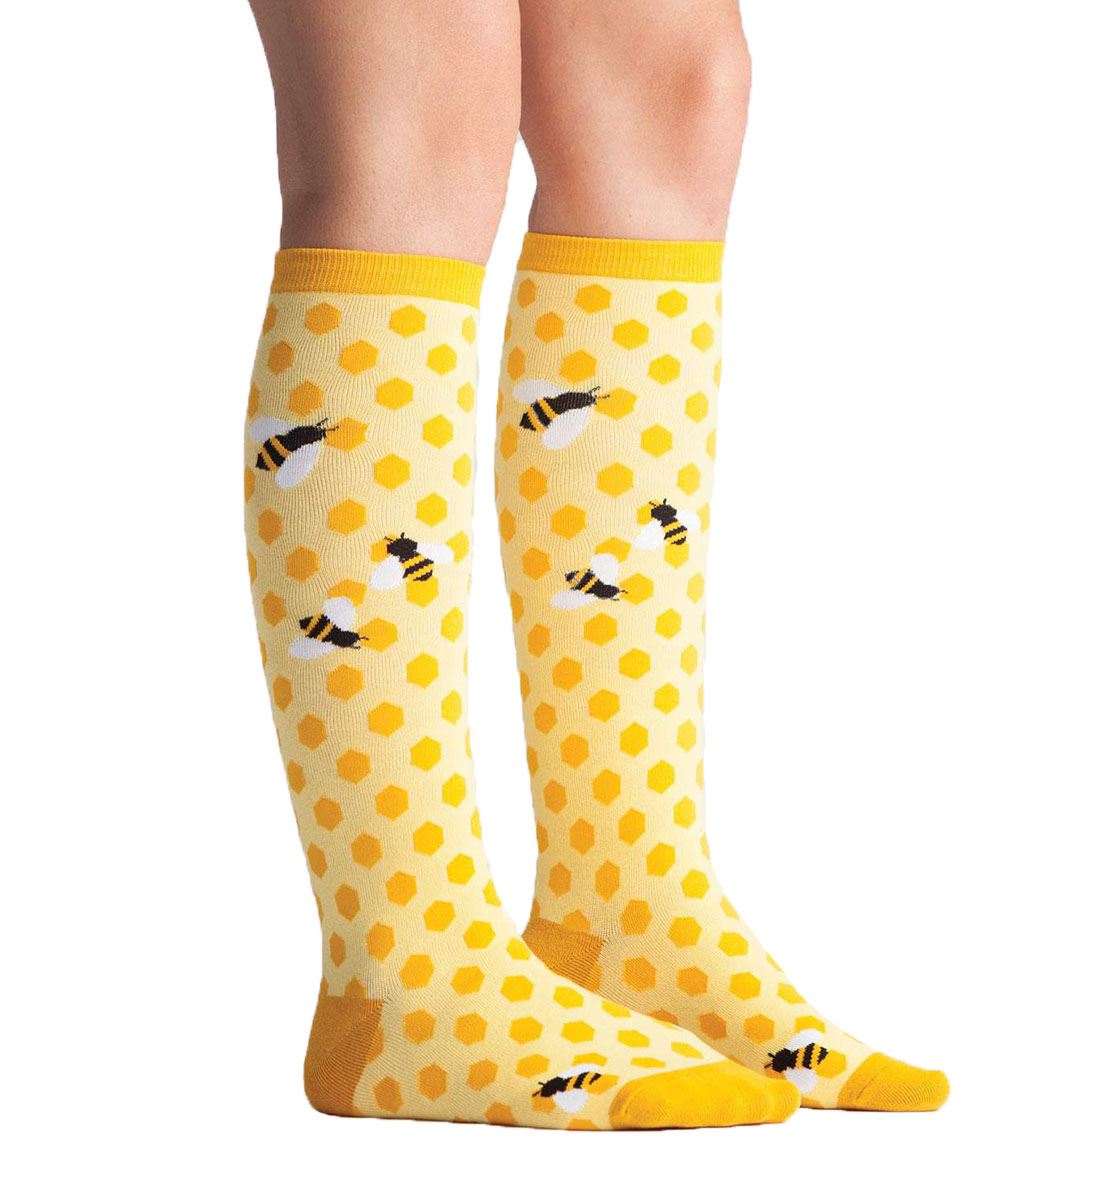 SOCK it to me Unisex Knee High Socks (f0192),Bee's Knees - Bee's Knees,One Size